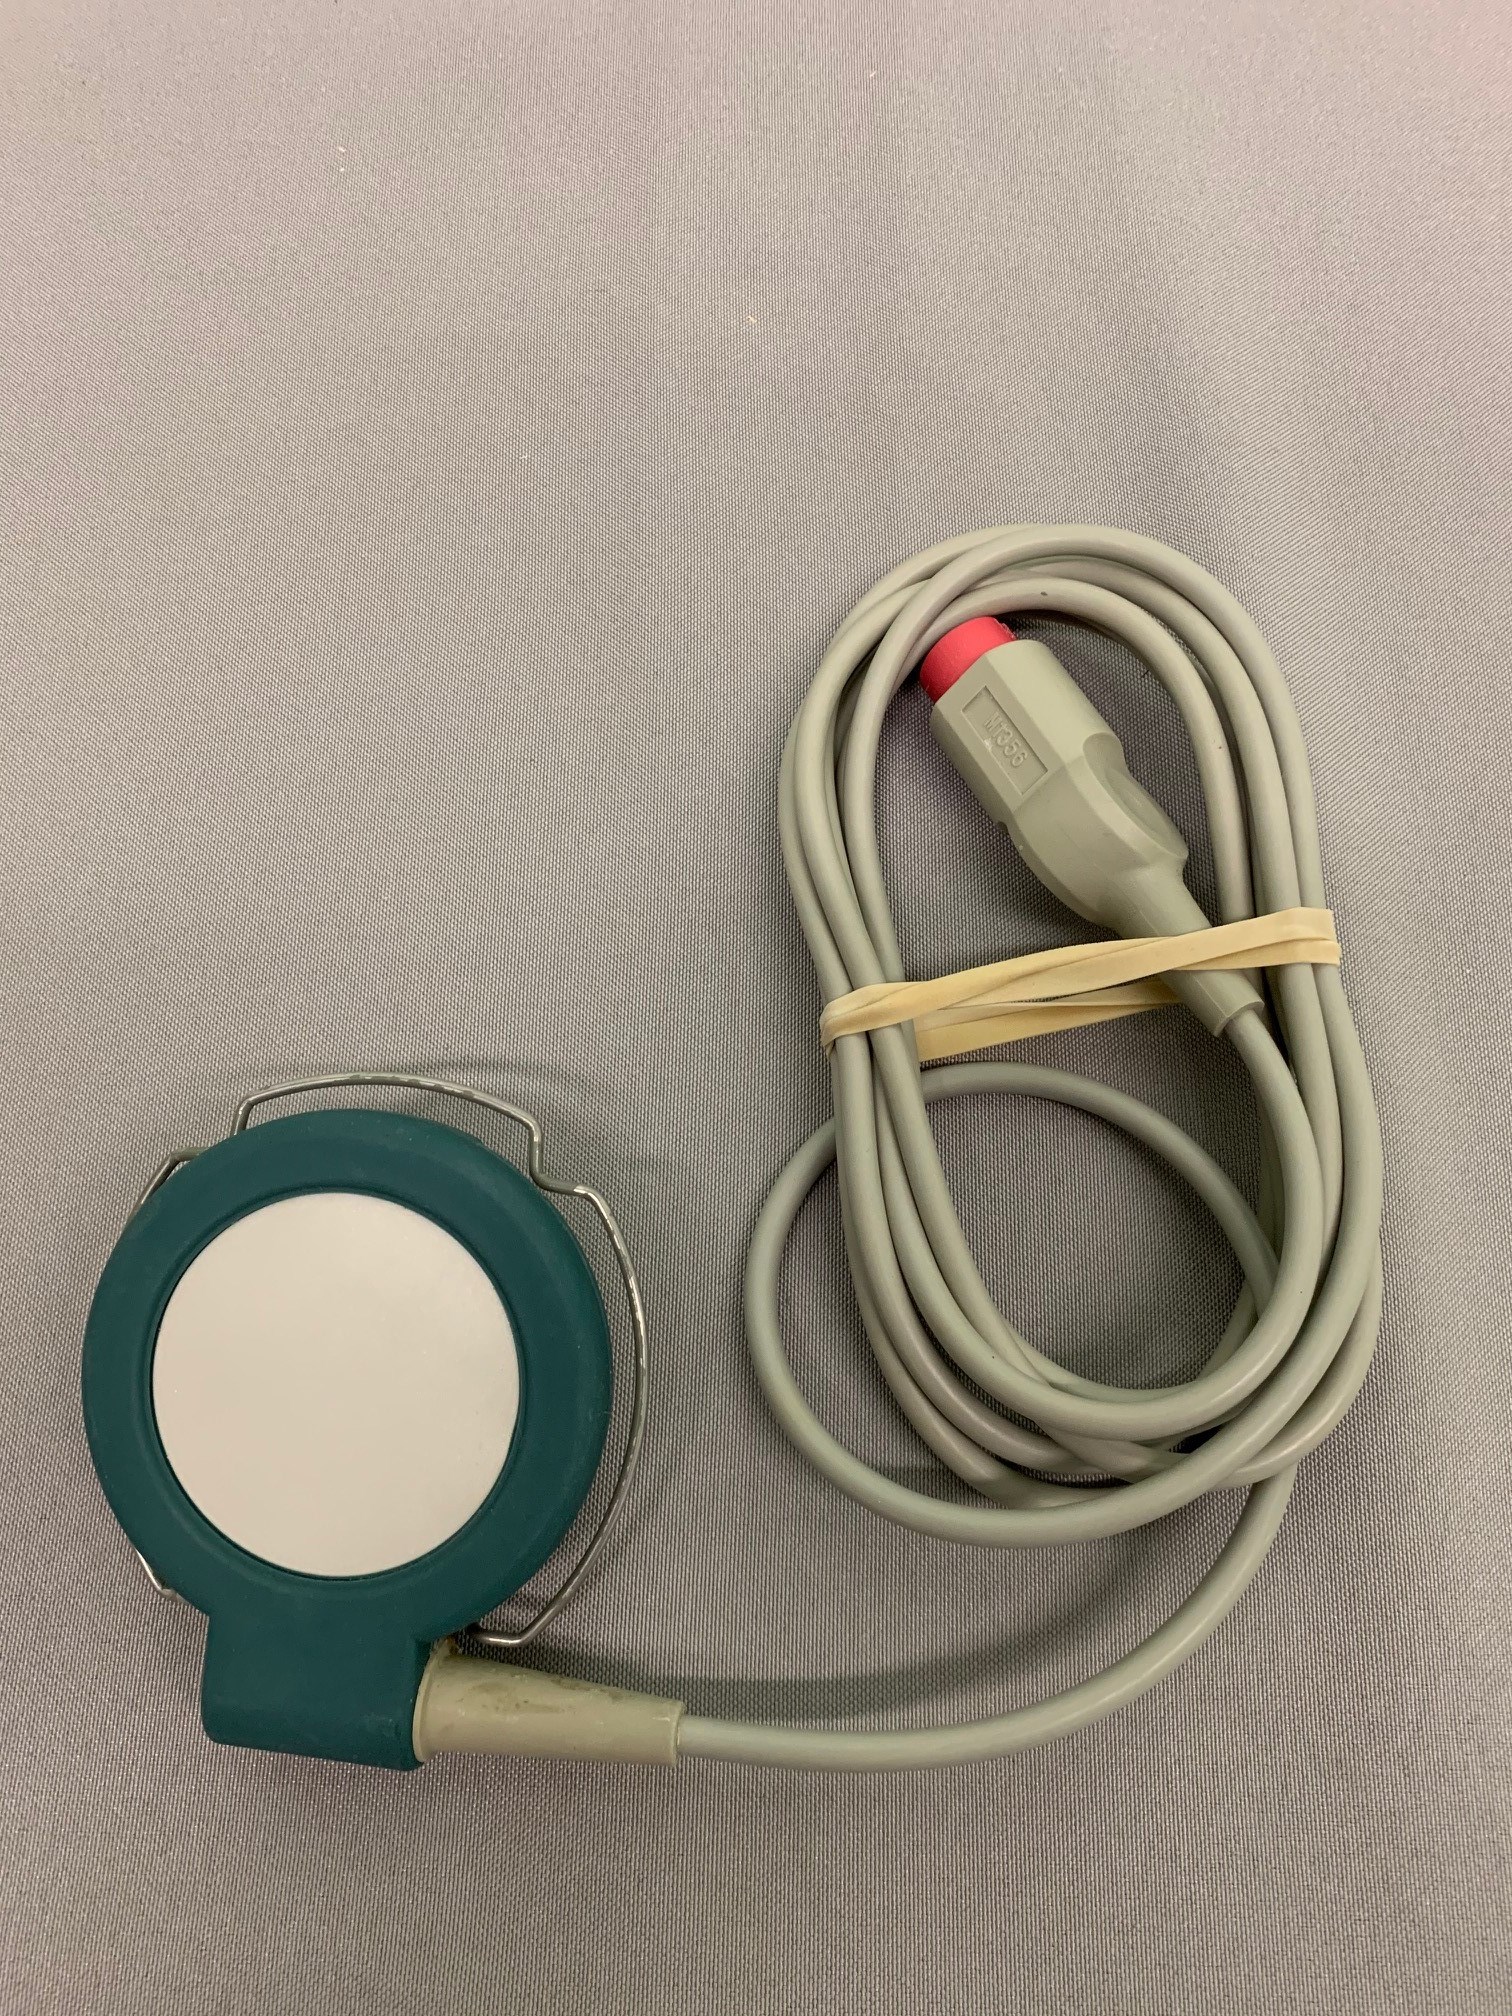 OTHER Neonatal Ultrasound Transducer